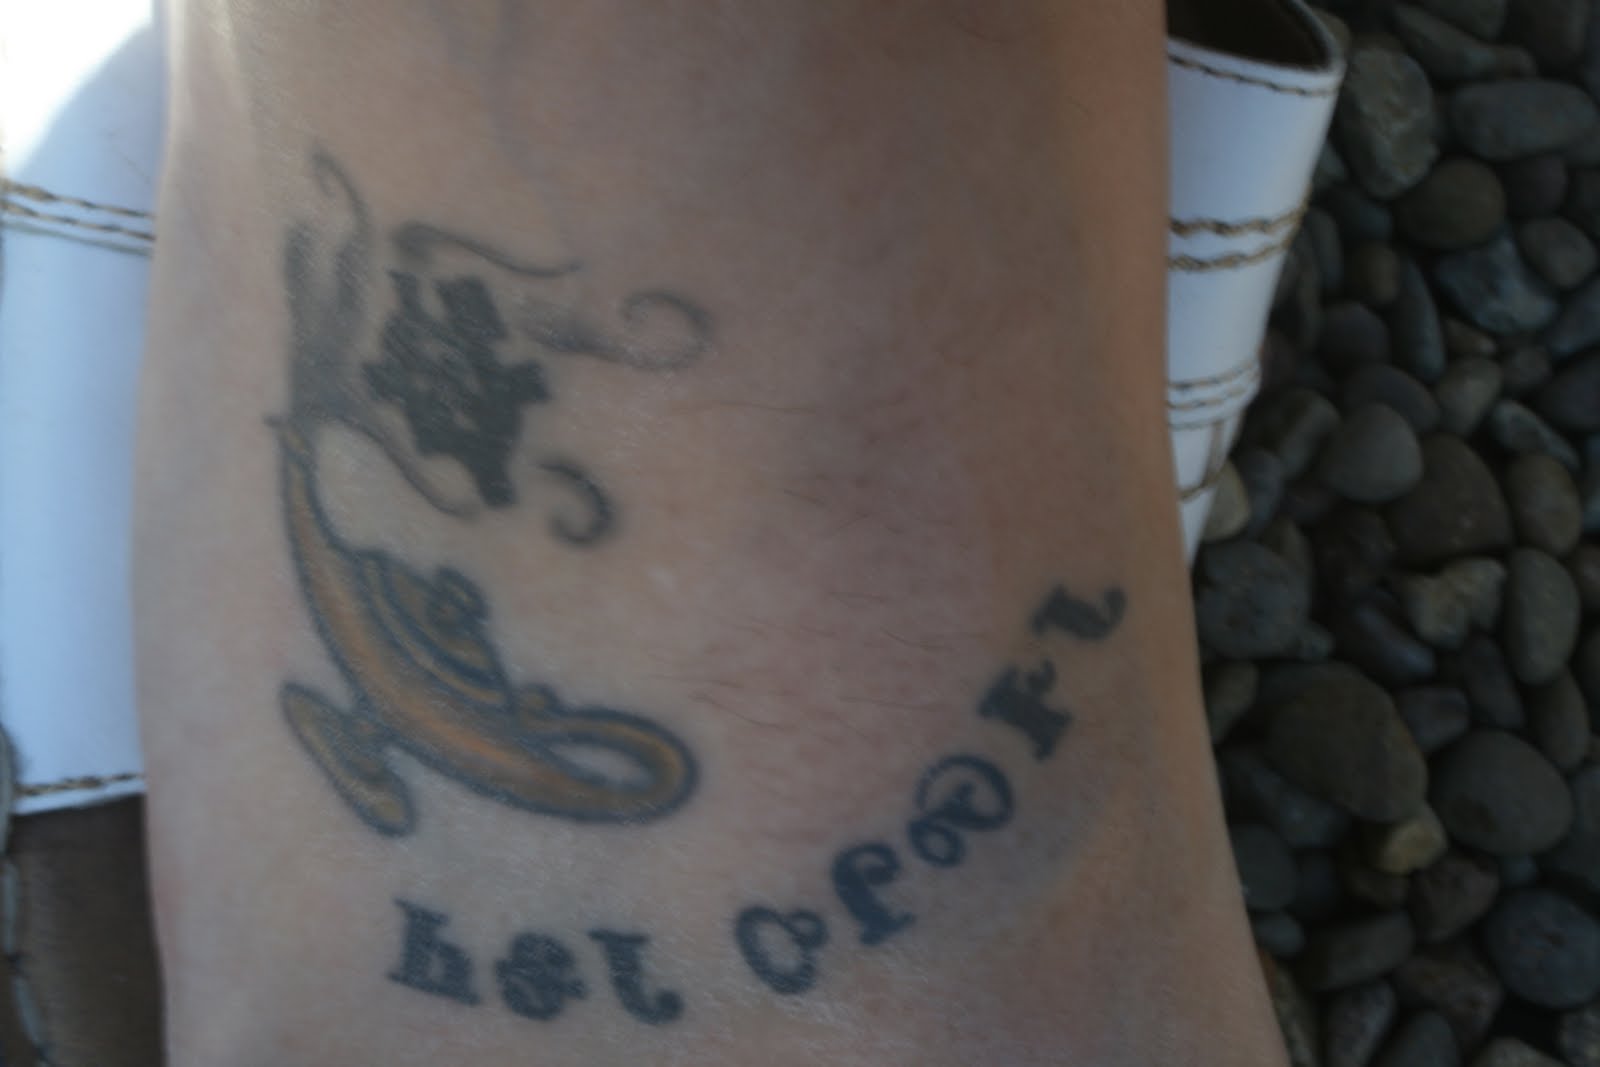 http://3.bp.blogspot.com/_vJSfh8Dxop4/TUCXpSWTvlI/AAAAAAAAApI/pJ92FLvOpqE/s1600/June26+tattoo.JPG